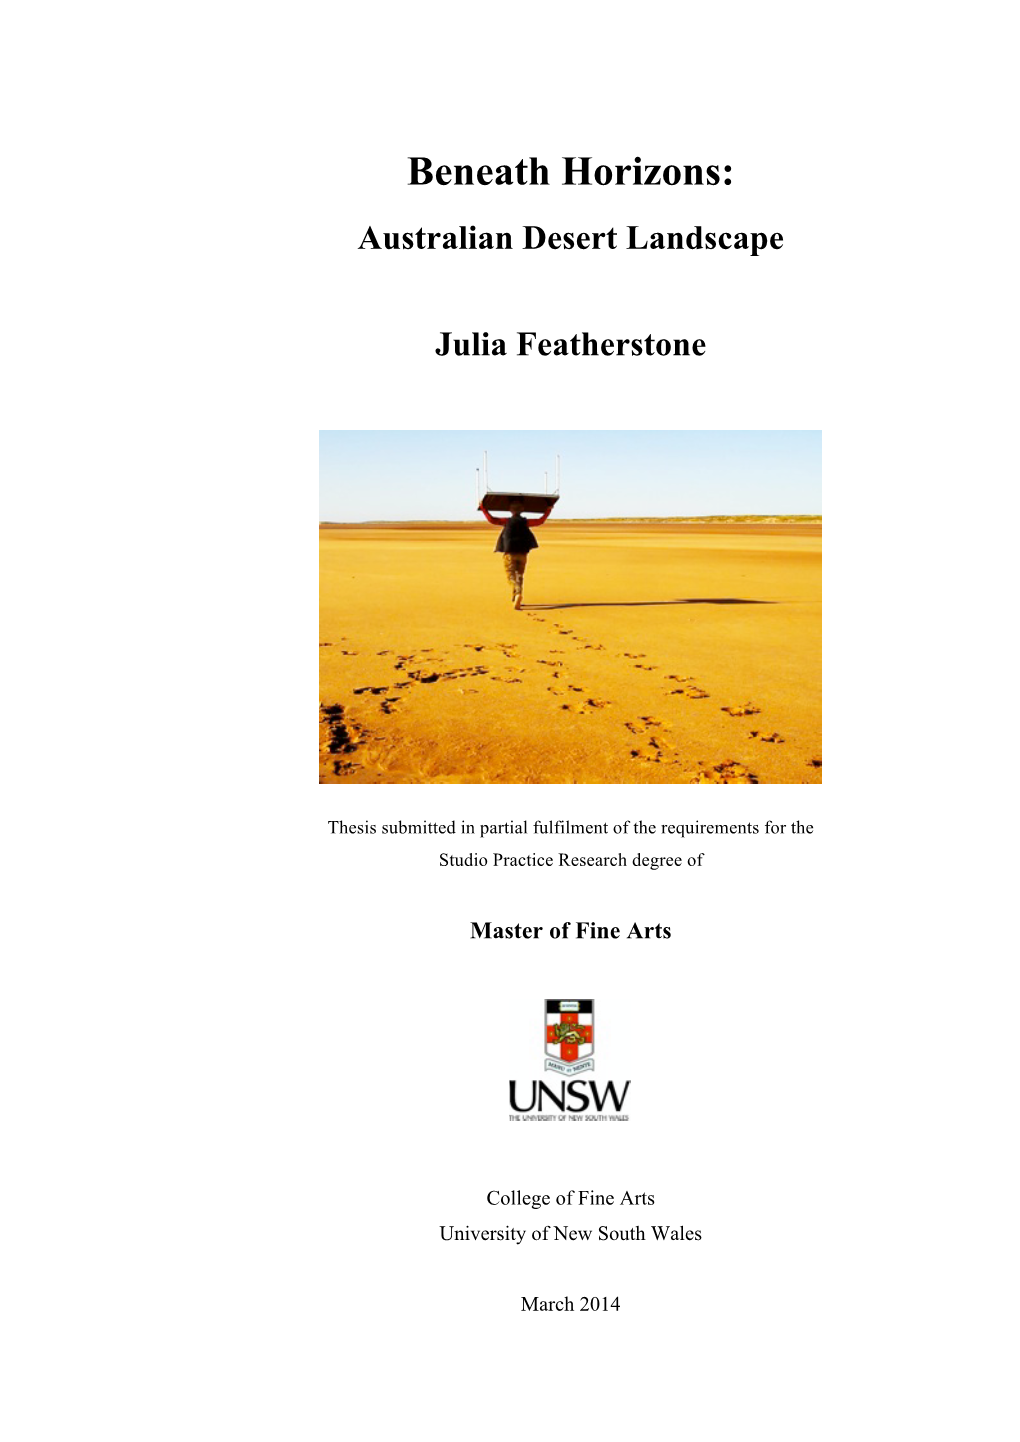 Beneath Horizons: Australian Desert Landscape